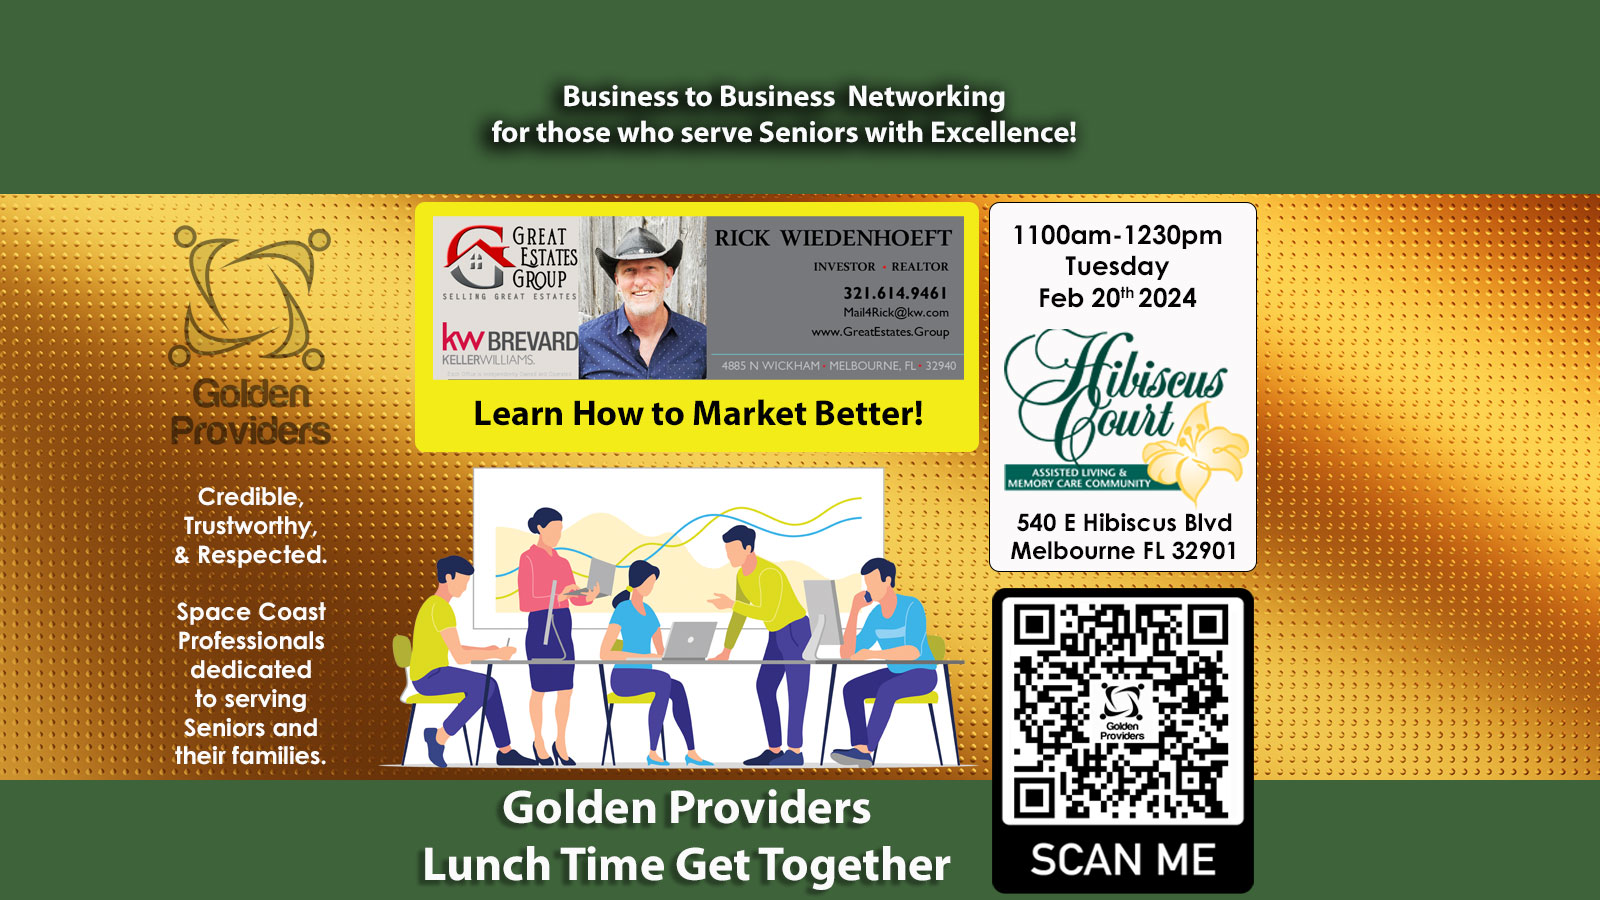 Golden Providers February Meeting